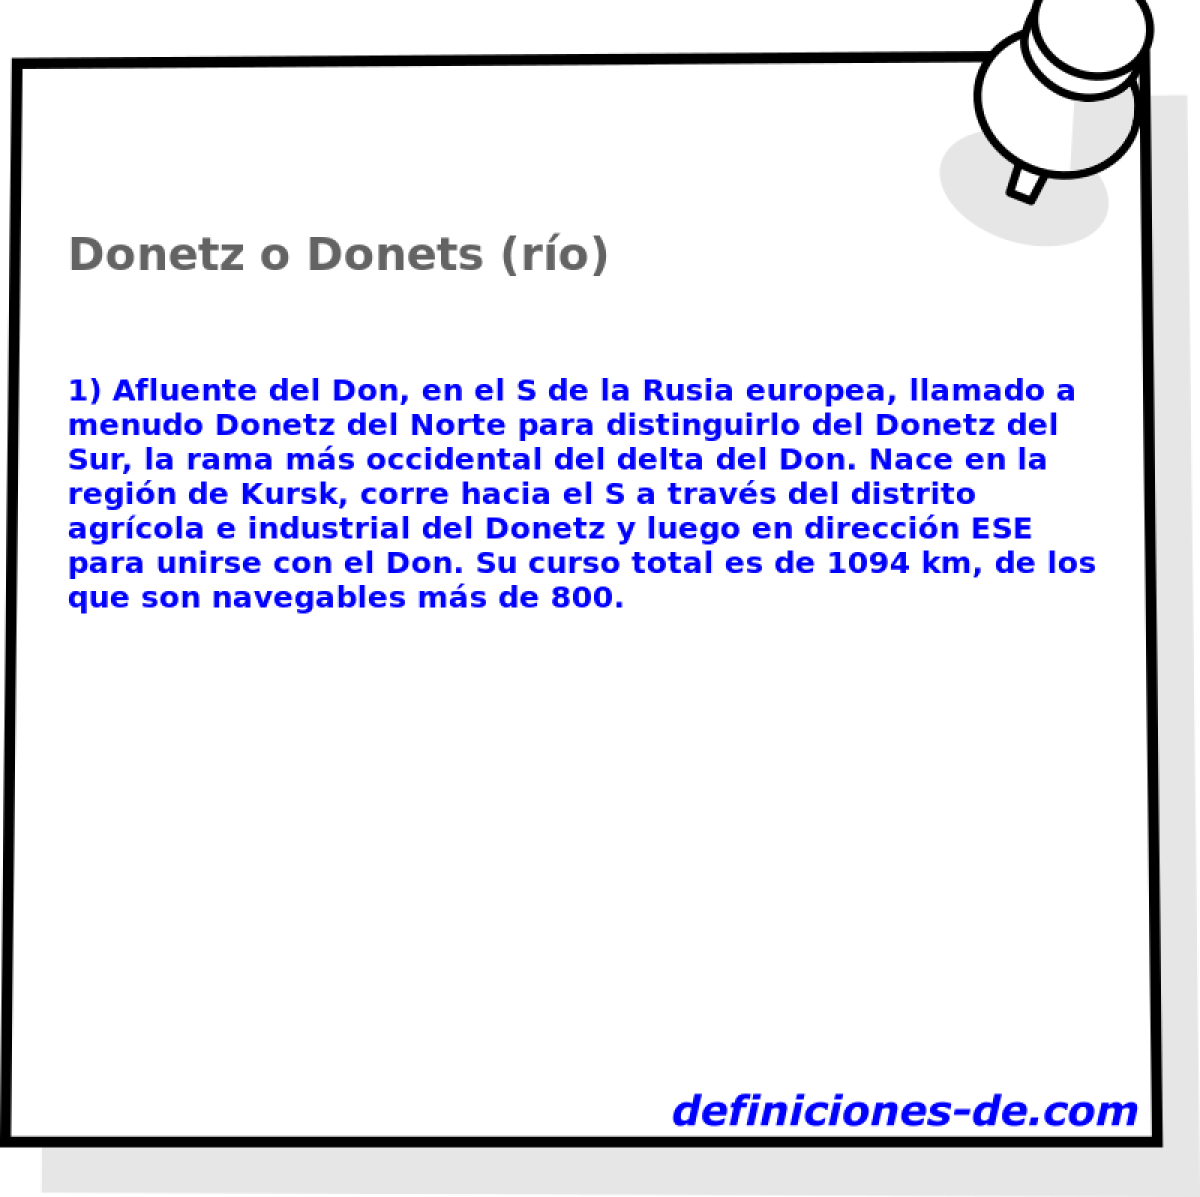 Donetz o Donets (ro) 